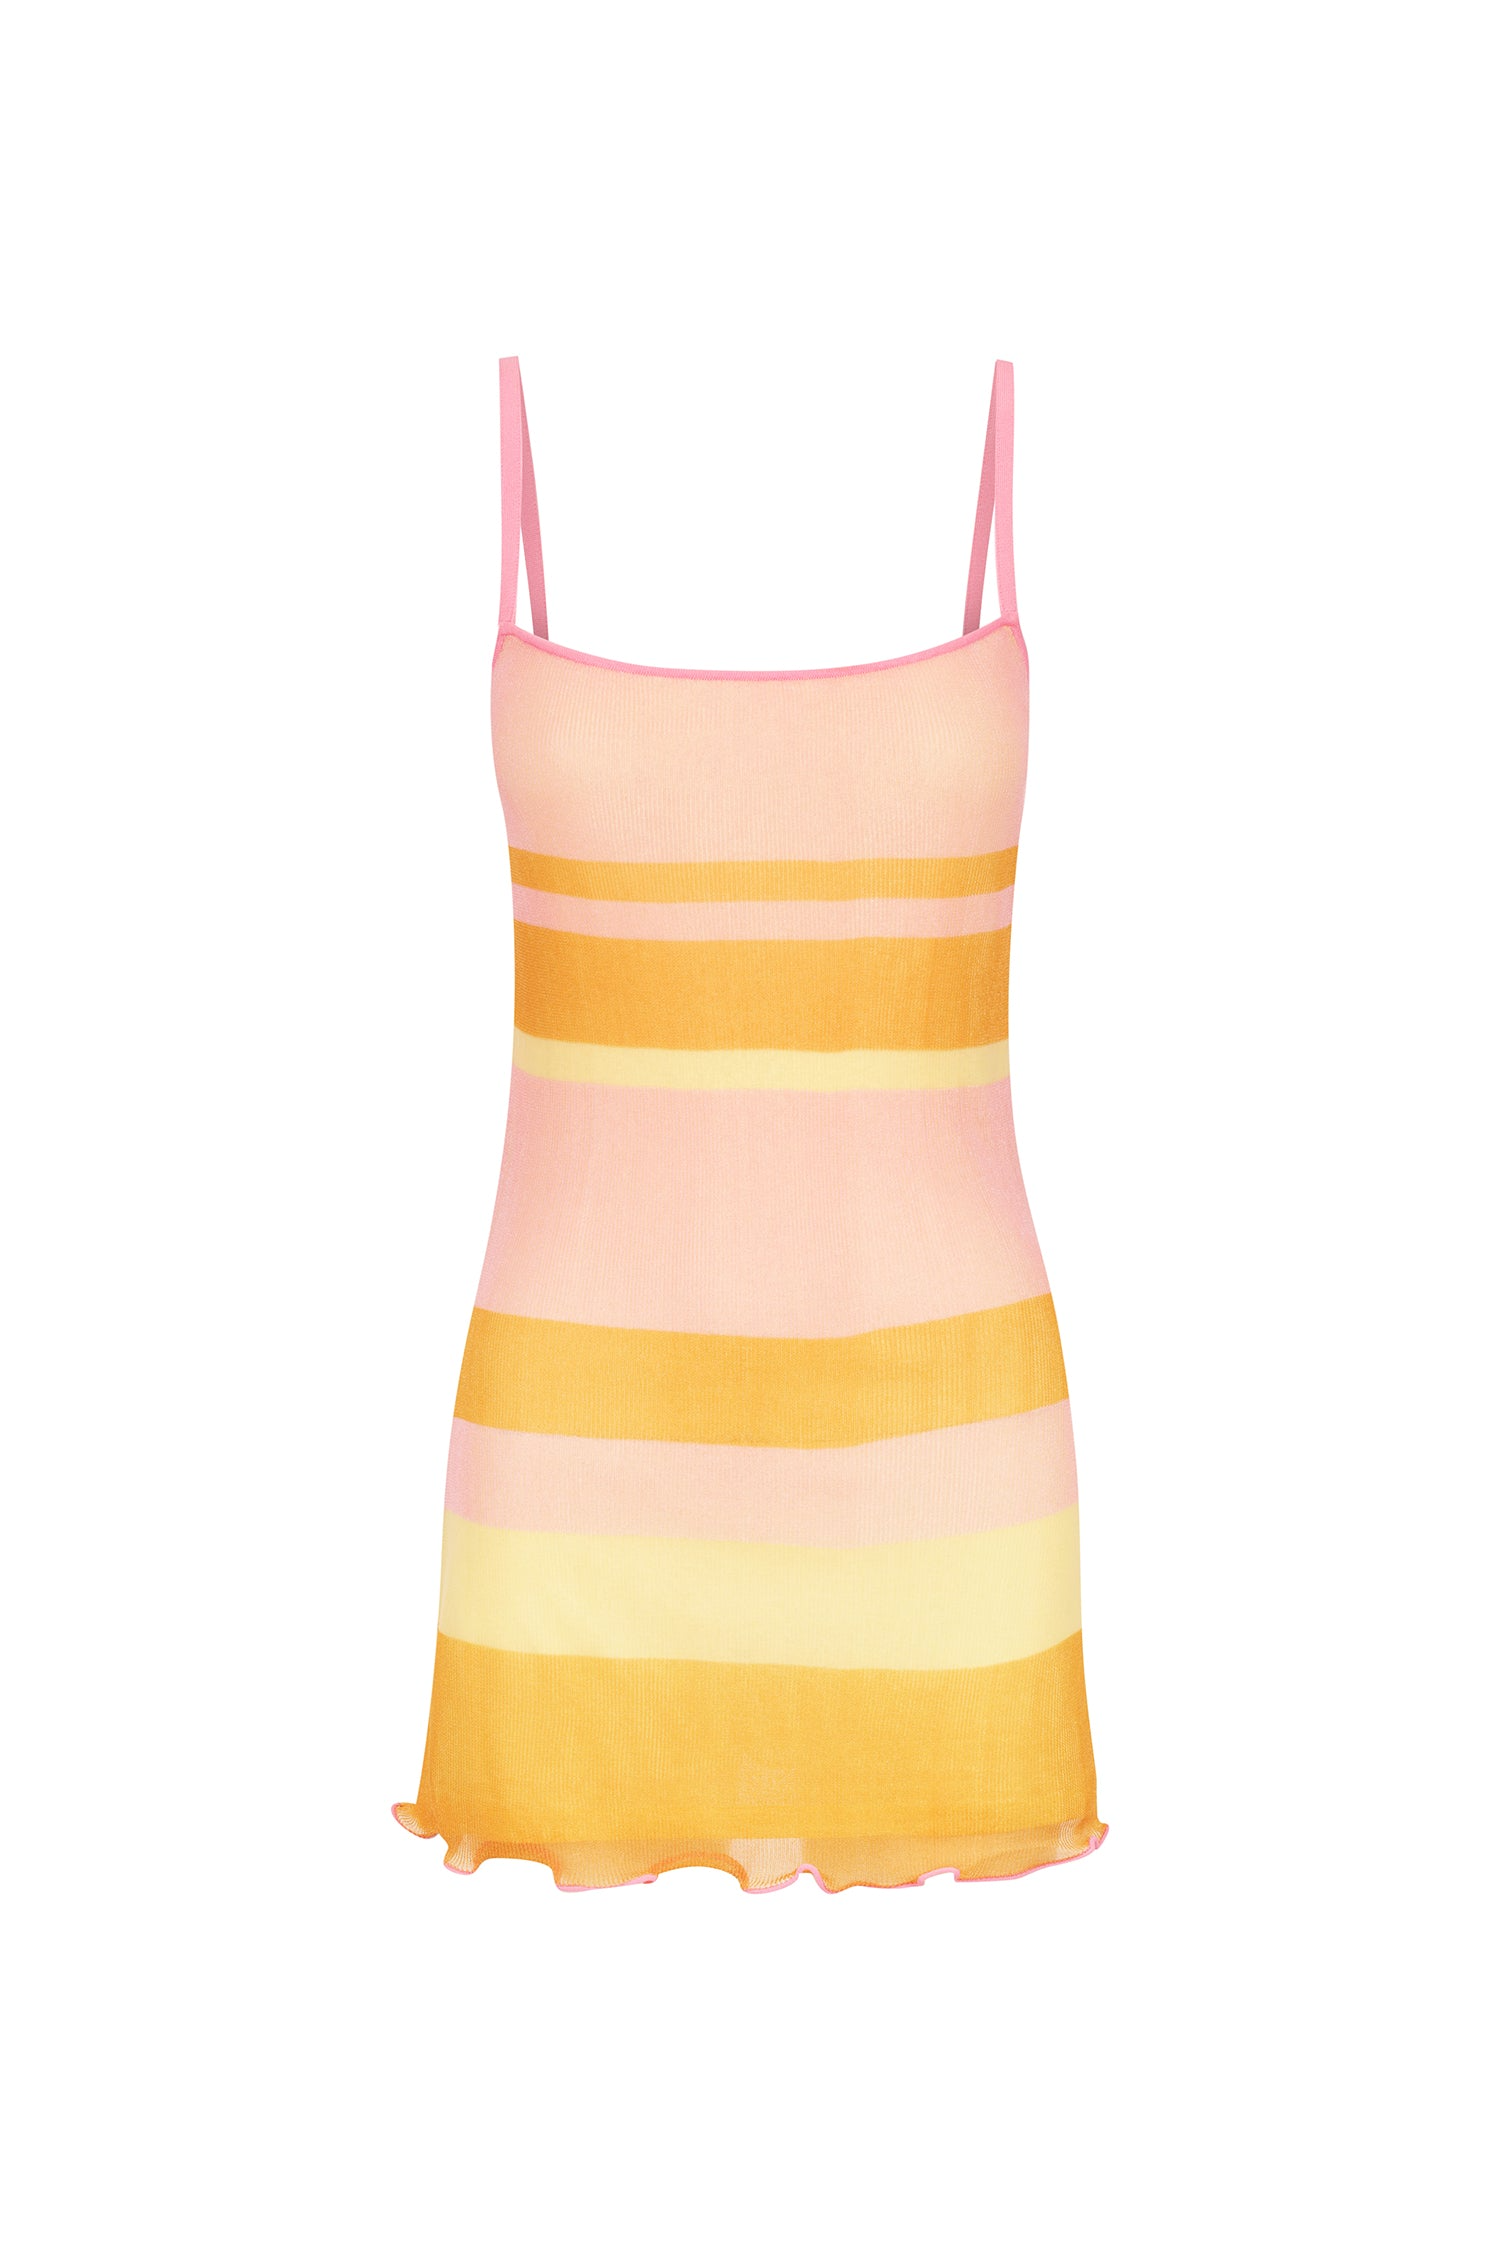 Hayman Dress // Sunrise Stripe